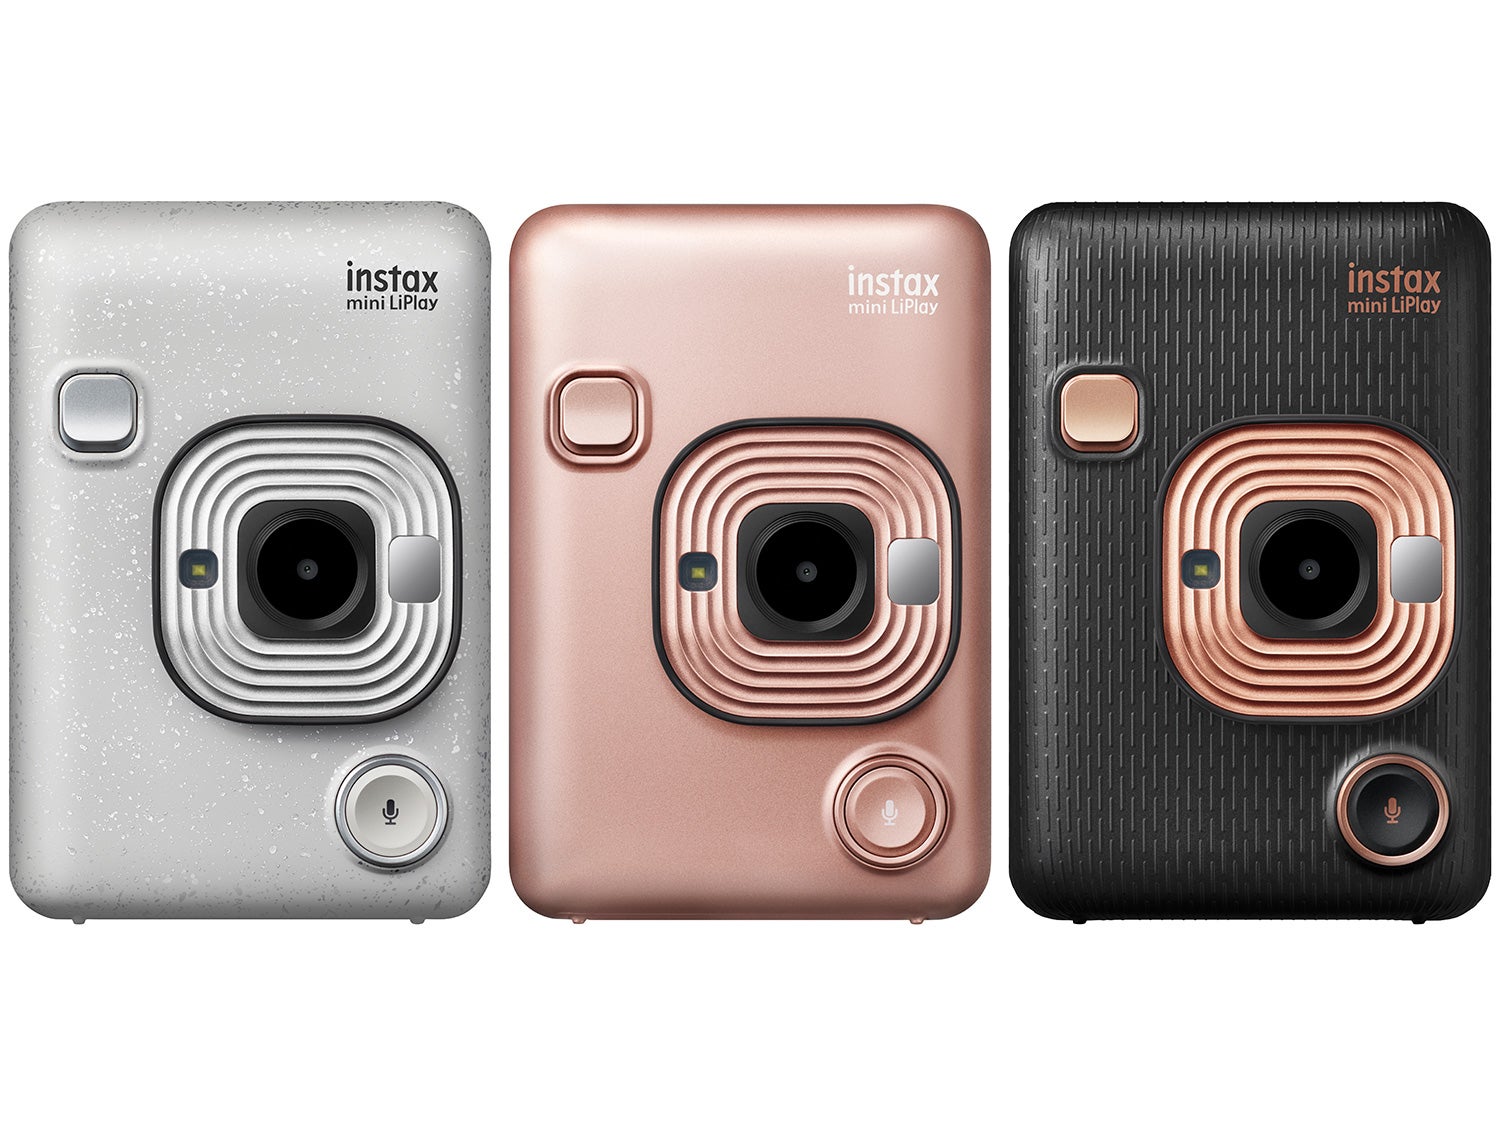 The Fujifilm Instax Mini LiPlay is an instant film camera that